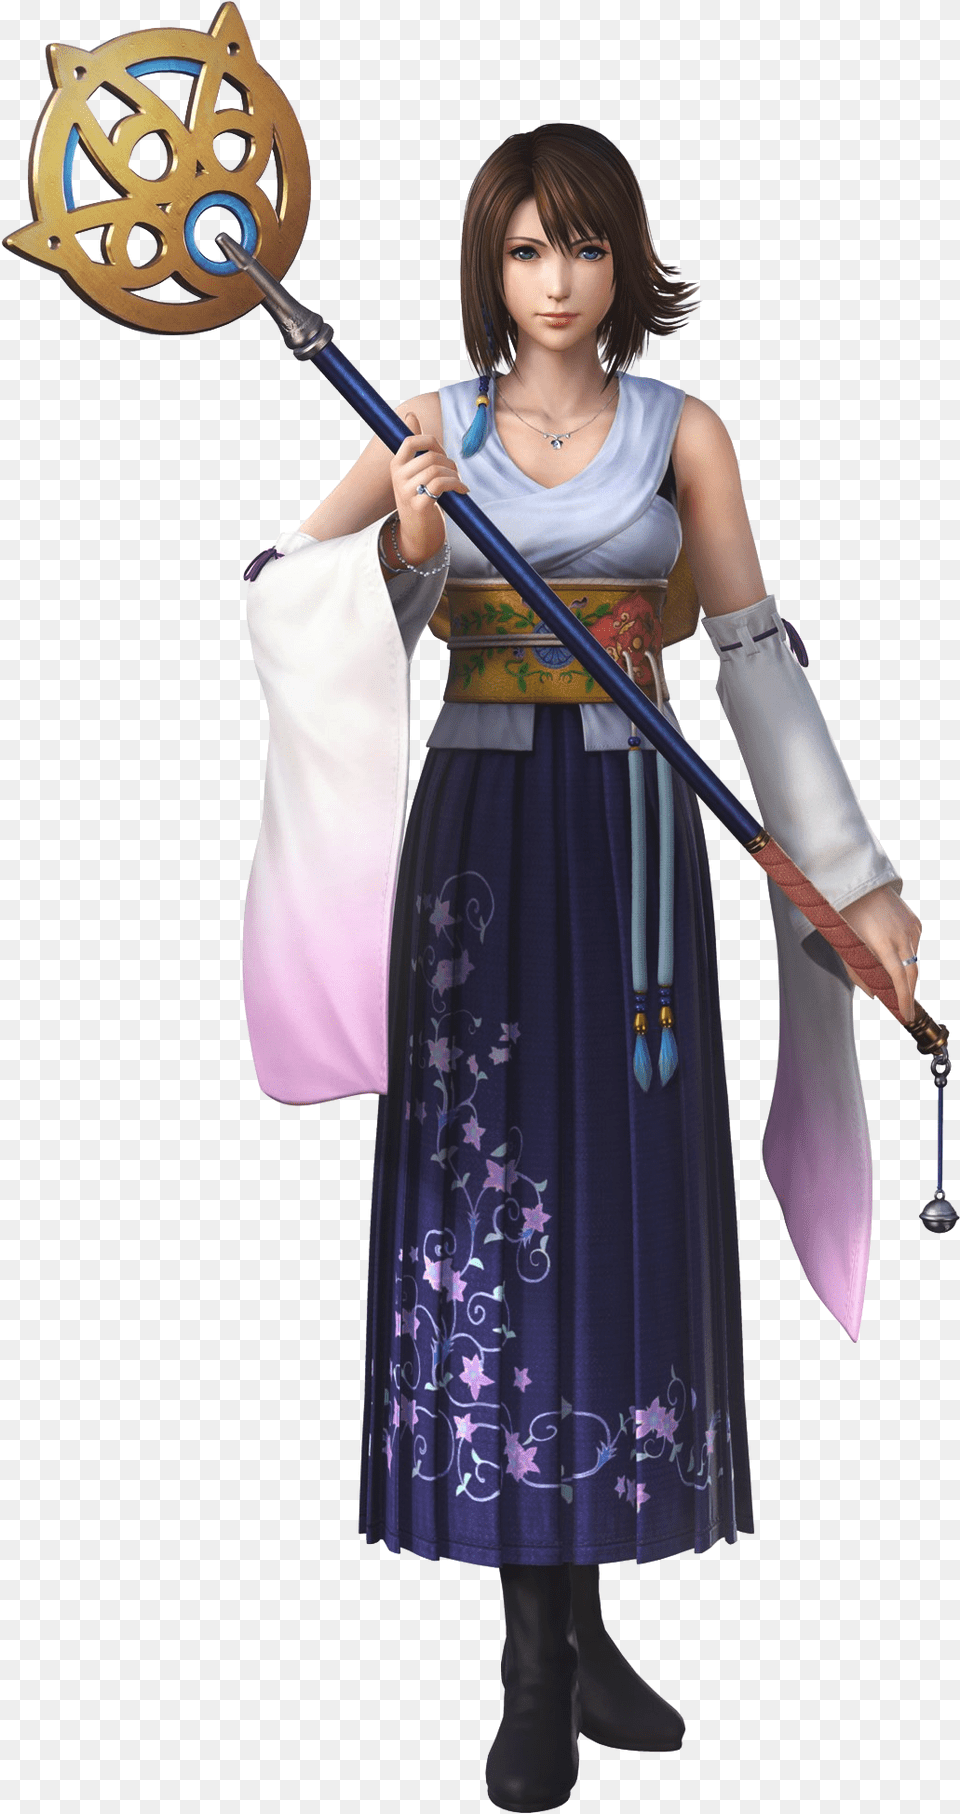 Dffnt Ffx Yuna Dissidia Final Fantasy Nt Yuna, Clothing, Costume, Dress, Person Png Image